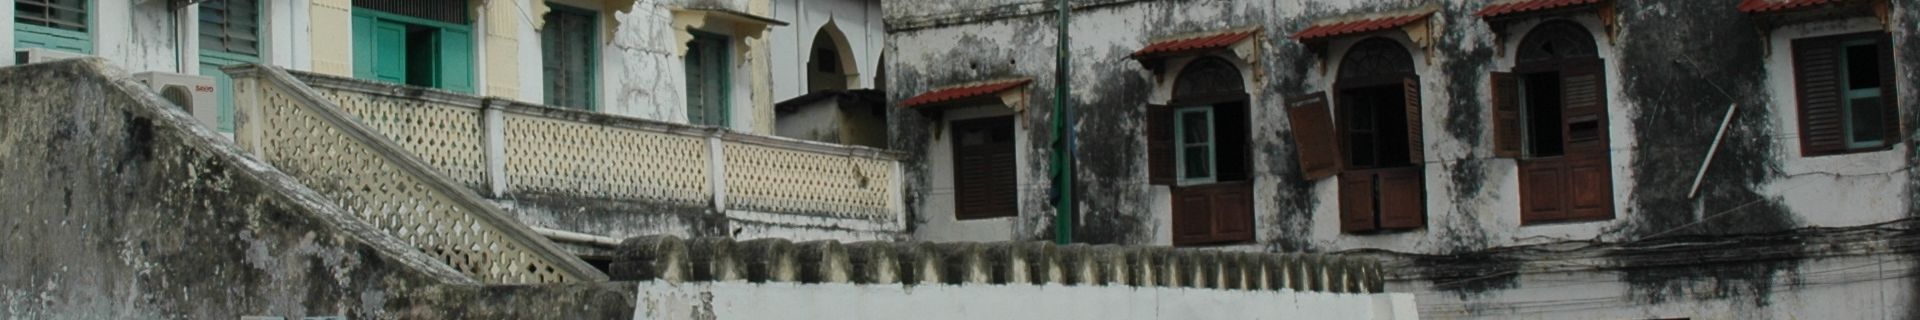 Zanzibar Stone Town buildings